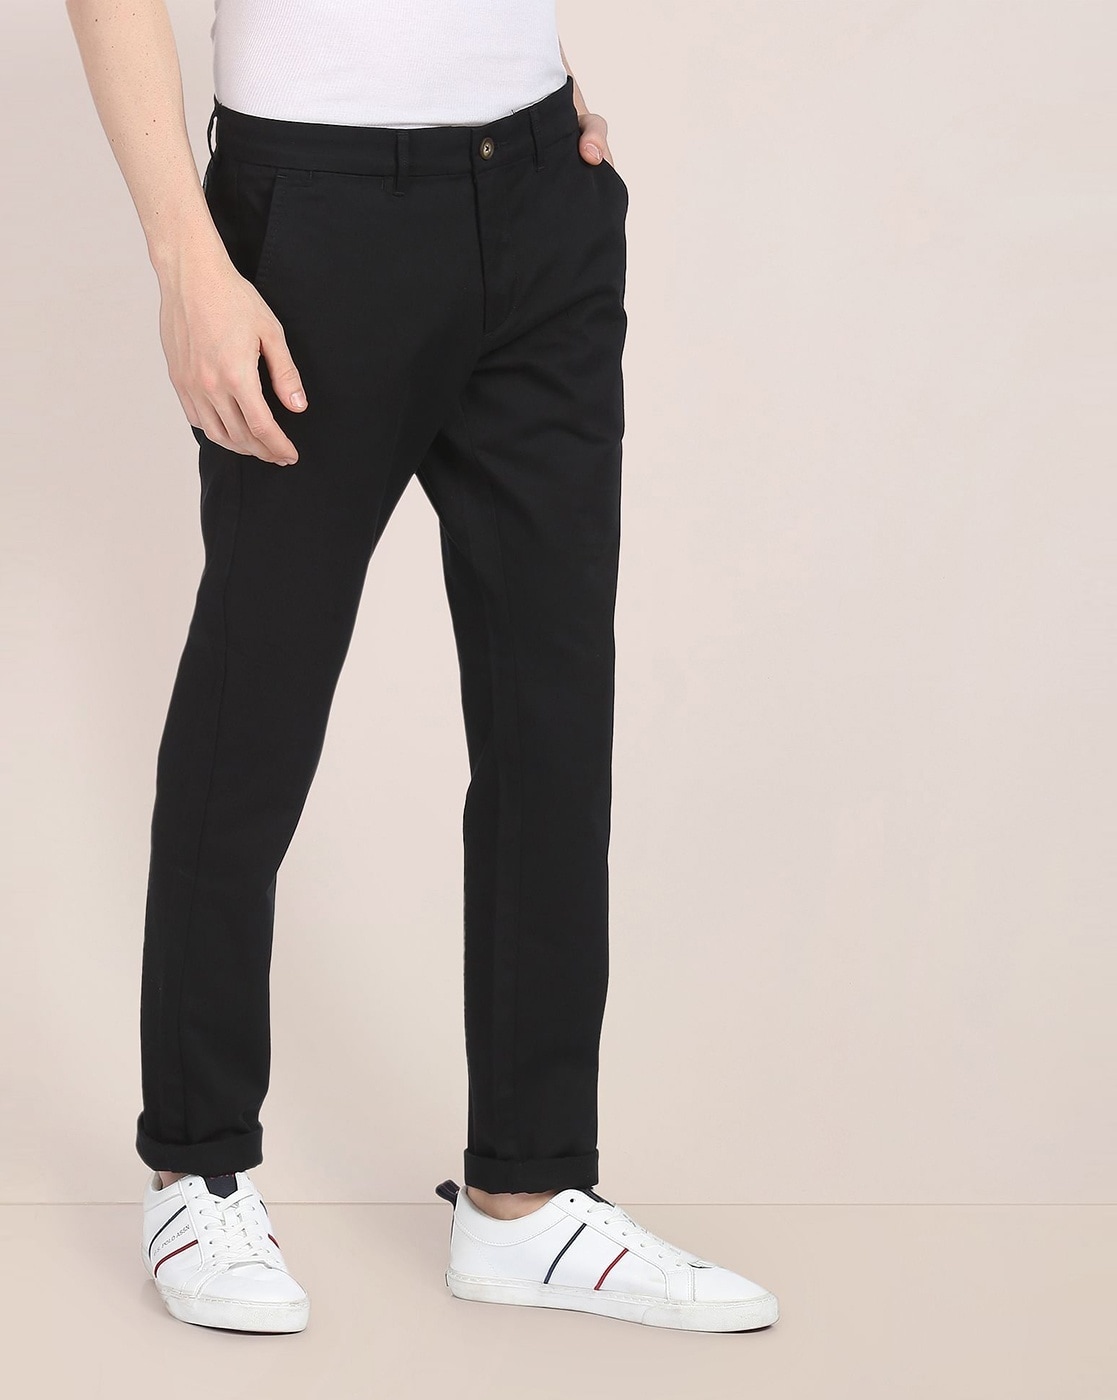 Buy Men Black Solid Slim Fit Casual Trousers Online  698222  Peter England